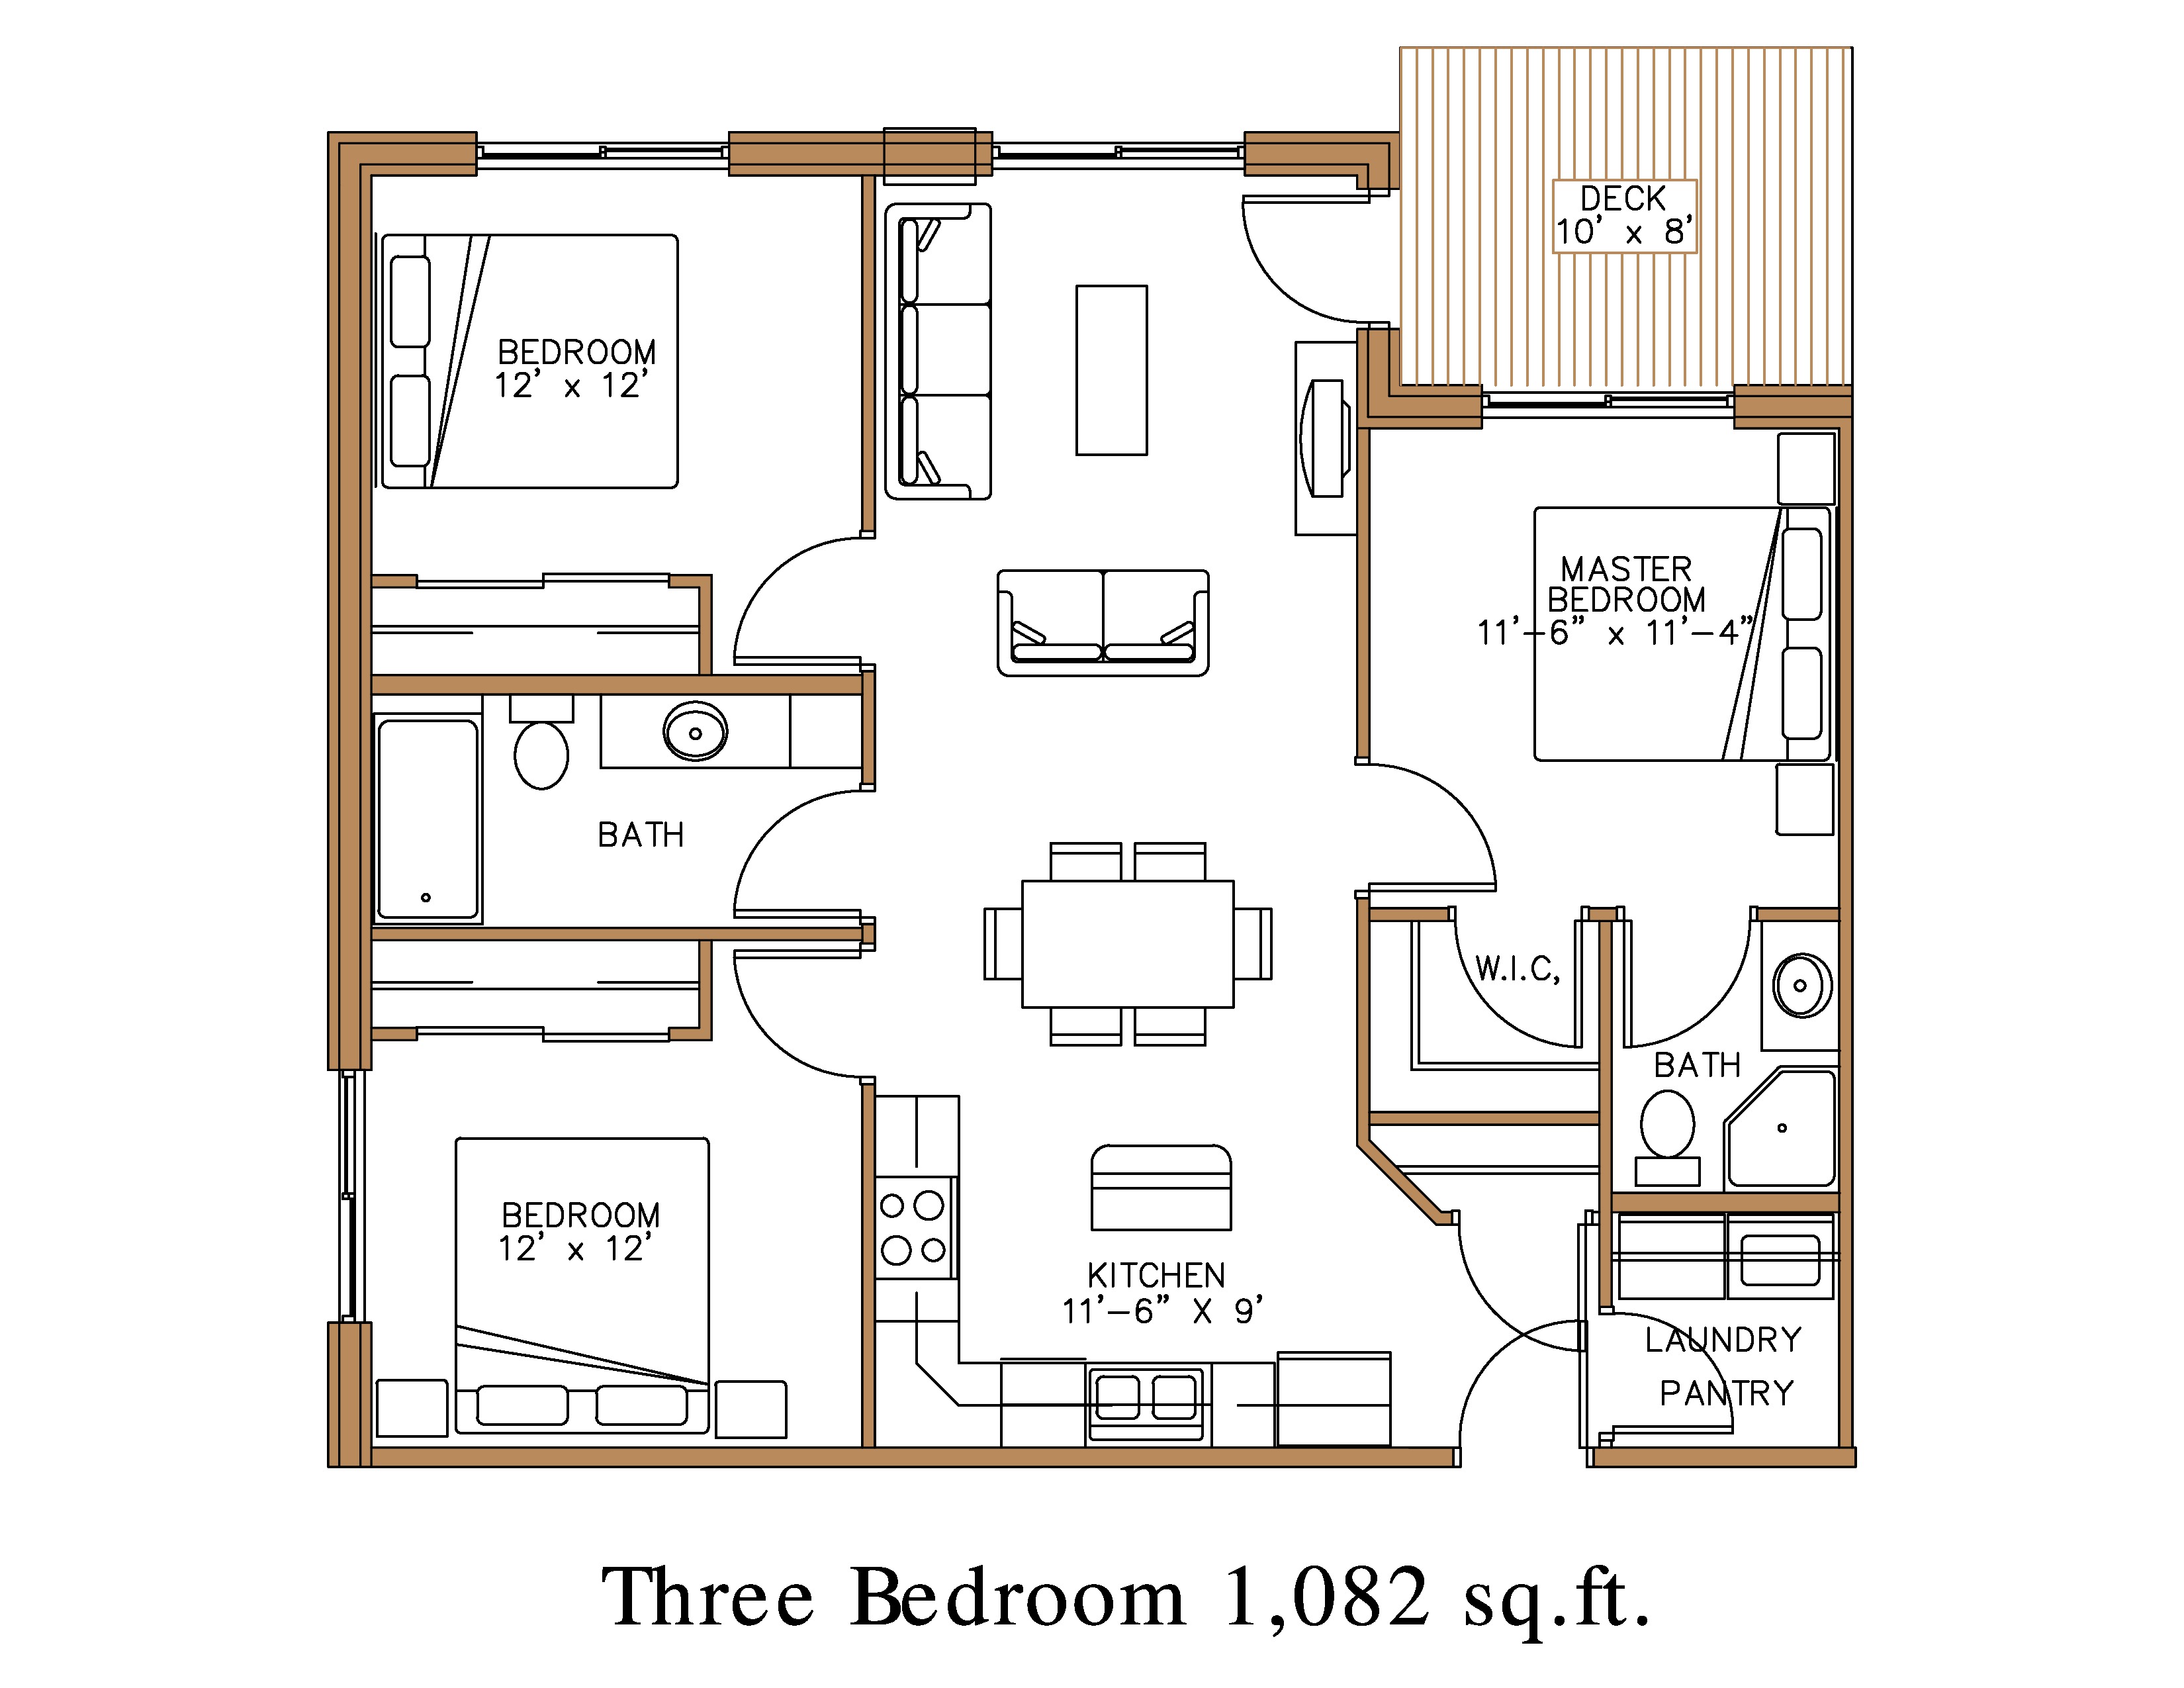 Modern 3 Bedroom Plan Ideas Of Europedias